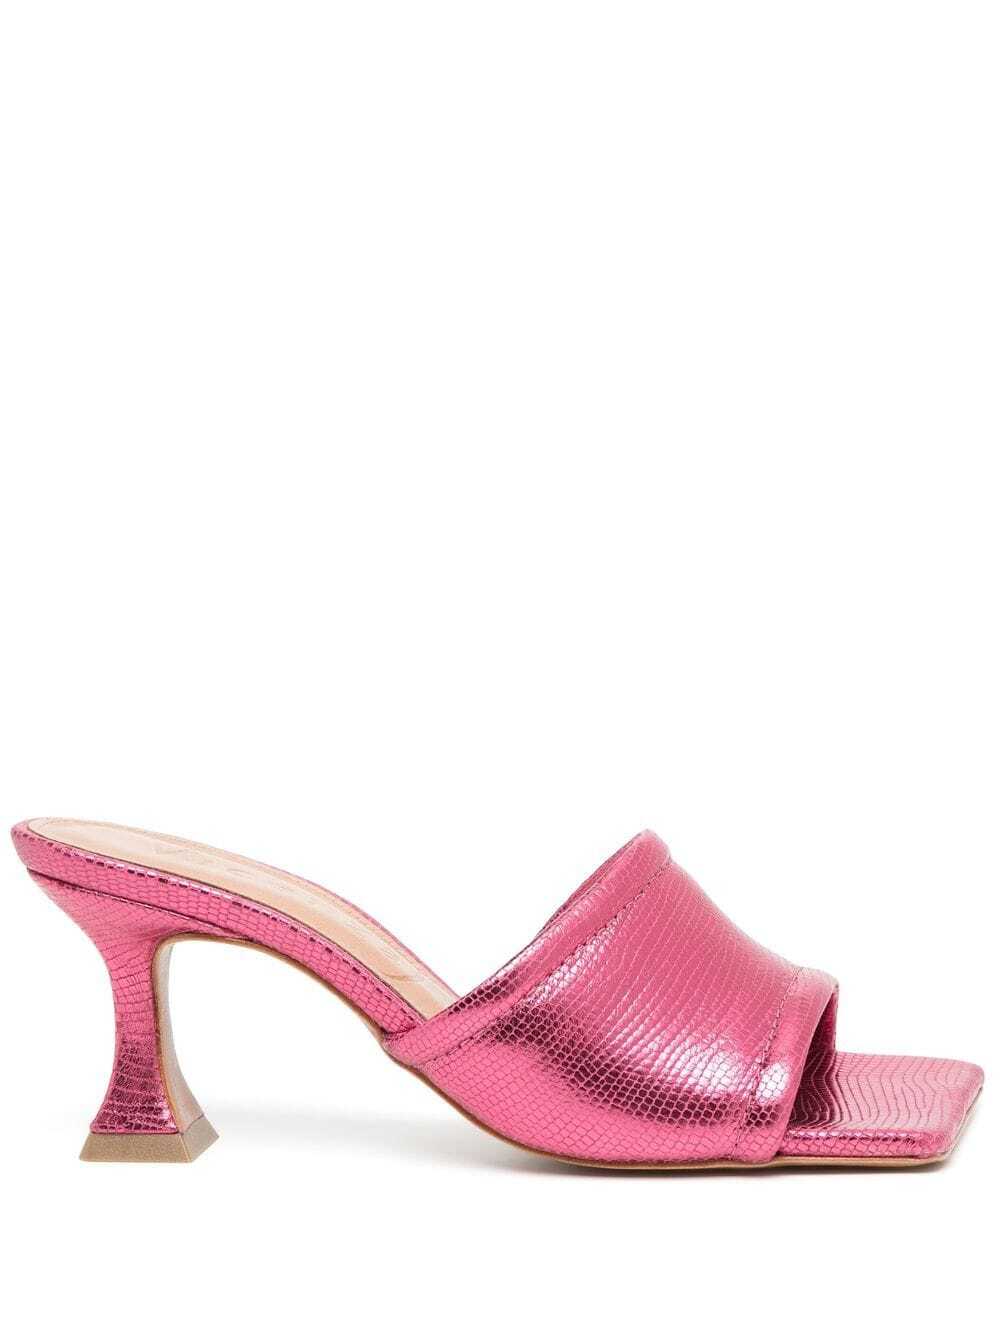 Vicenza metallic square-toe mules - Pink